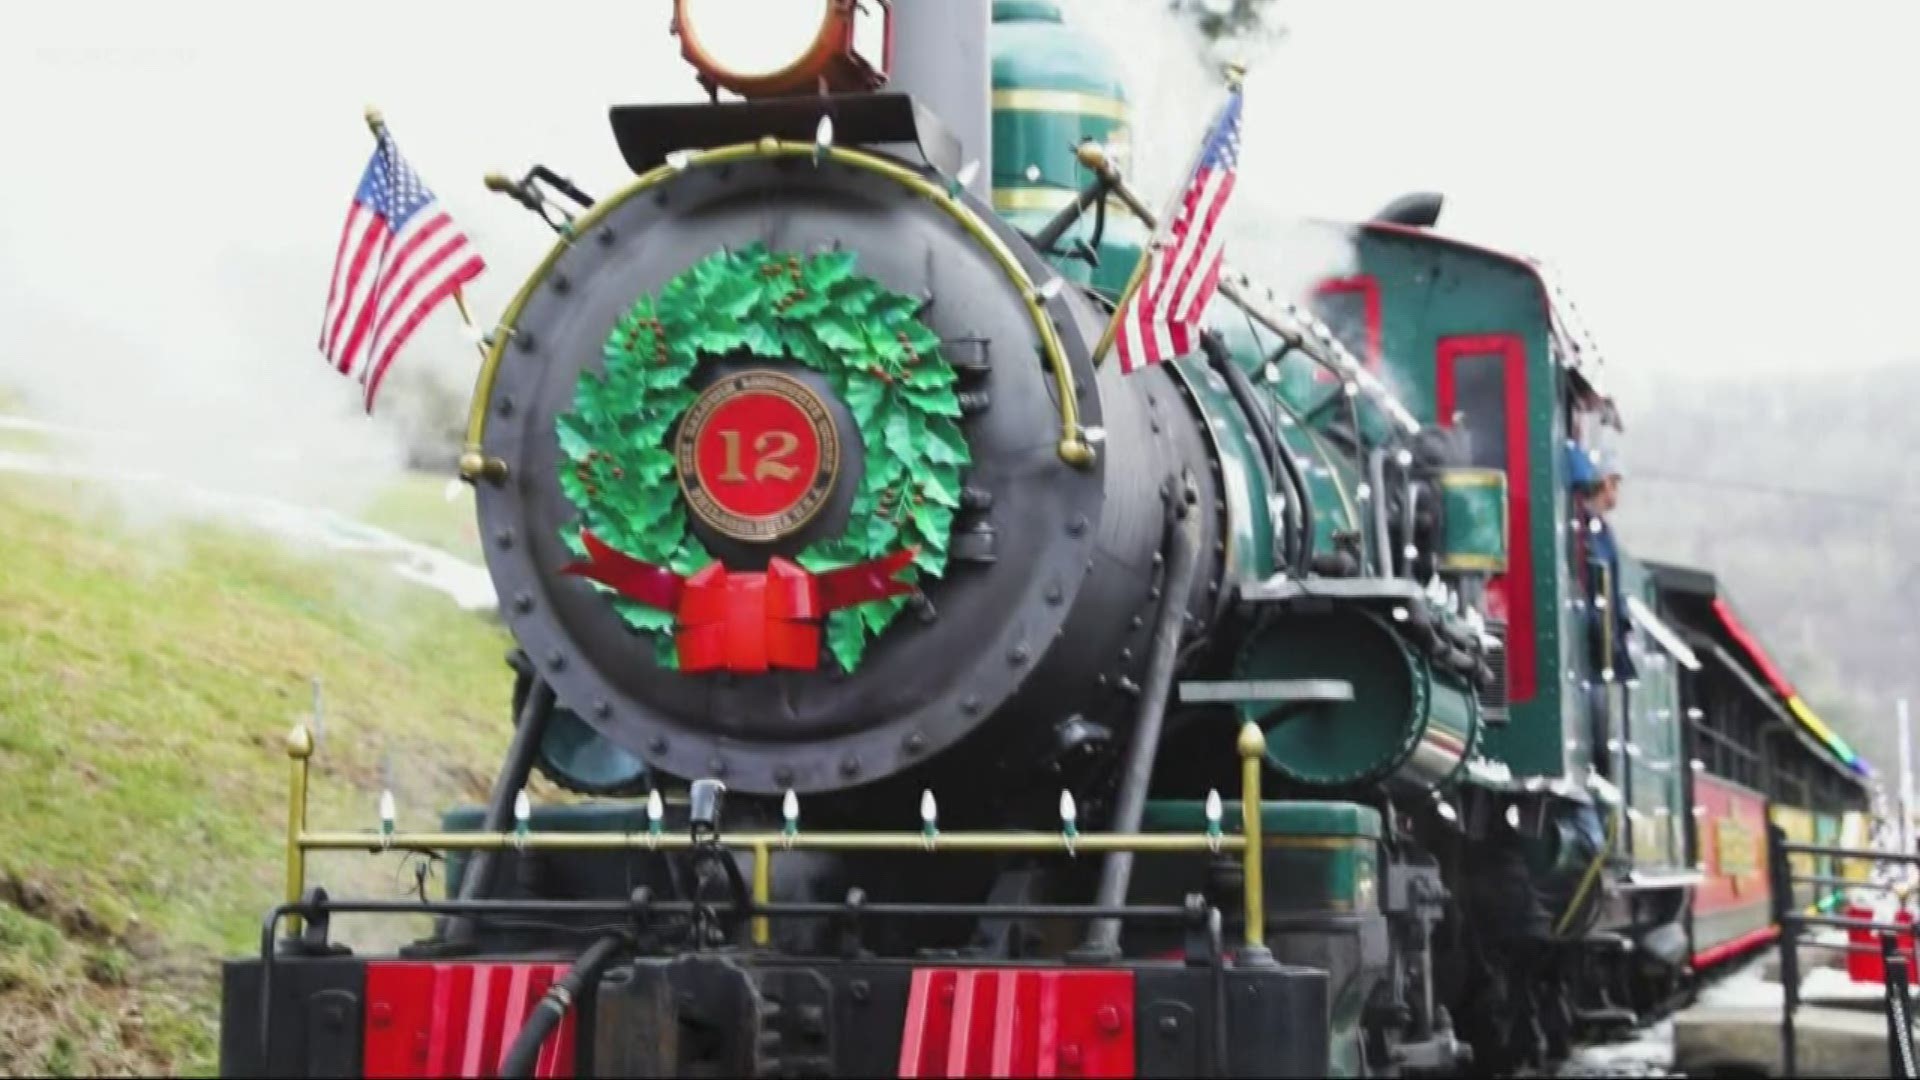 Meet Santa, see a Christmas show and take a train ride through winter wonderland at Tweetsie Christmas.